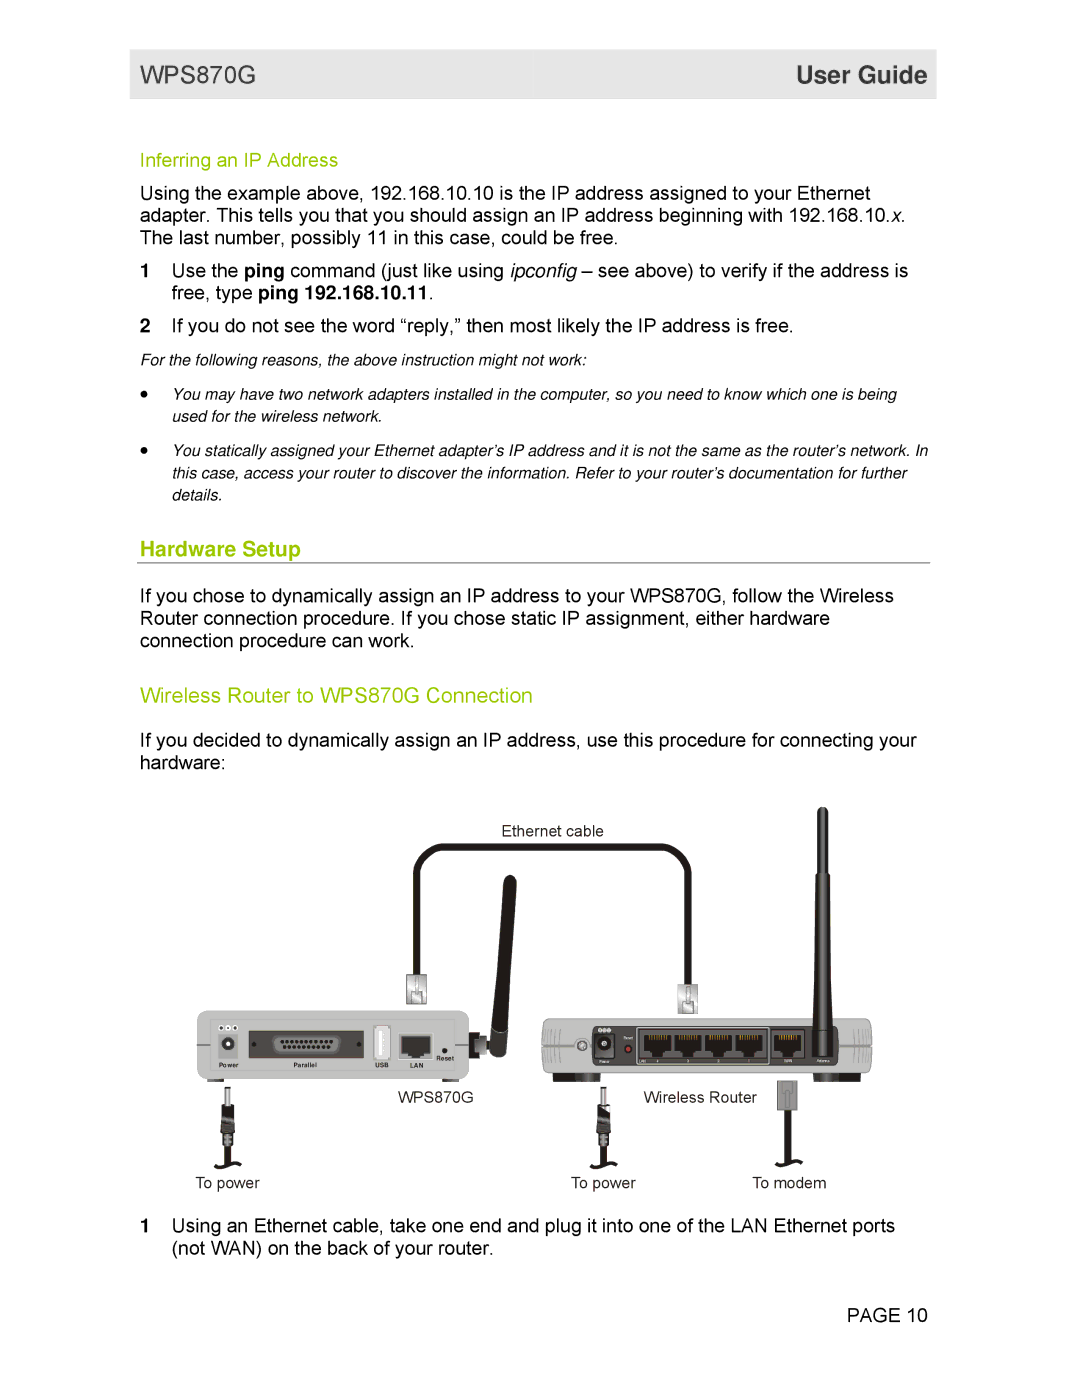 Motorola manual Hardware Setup, Wireless Router to WPS870G Connection 